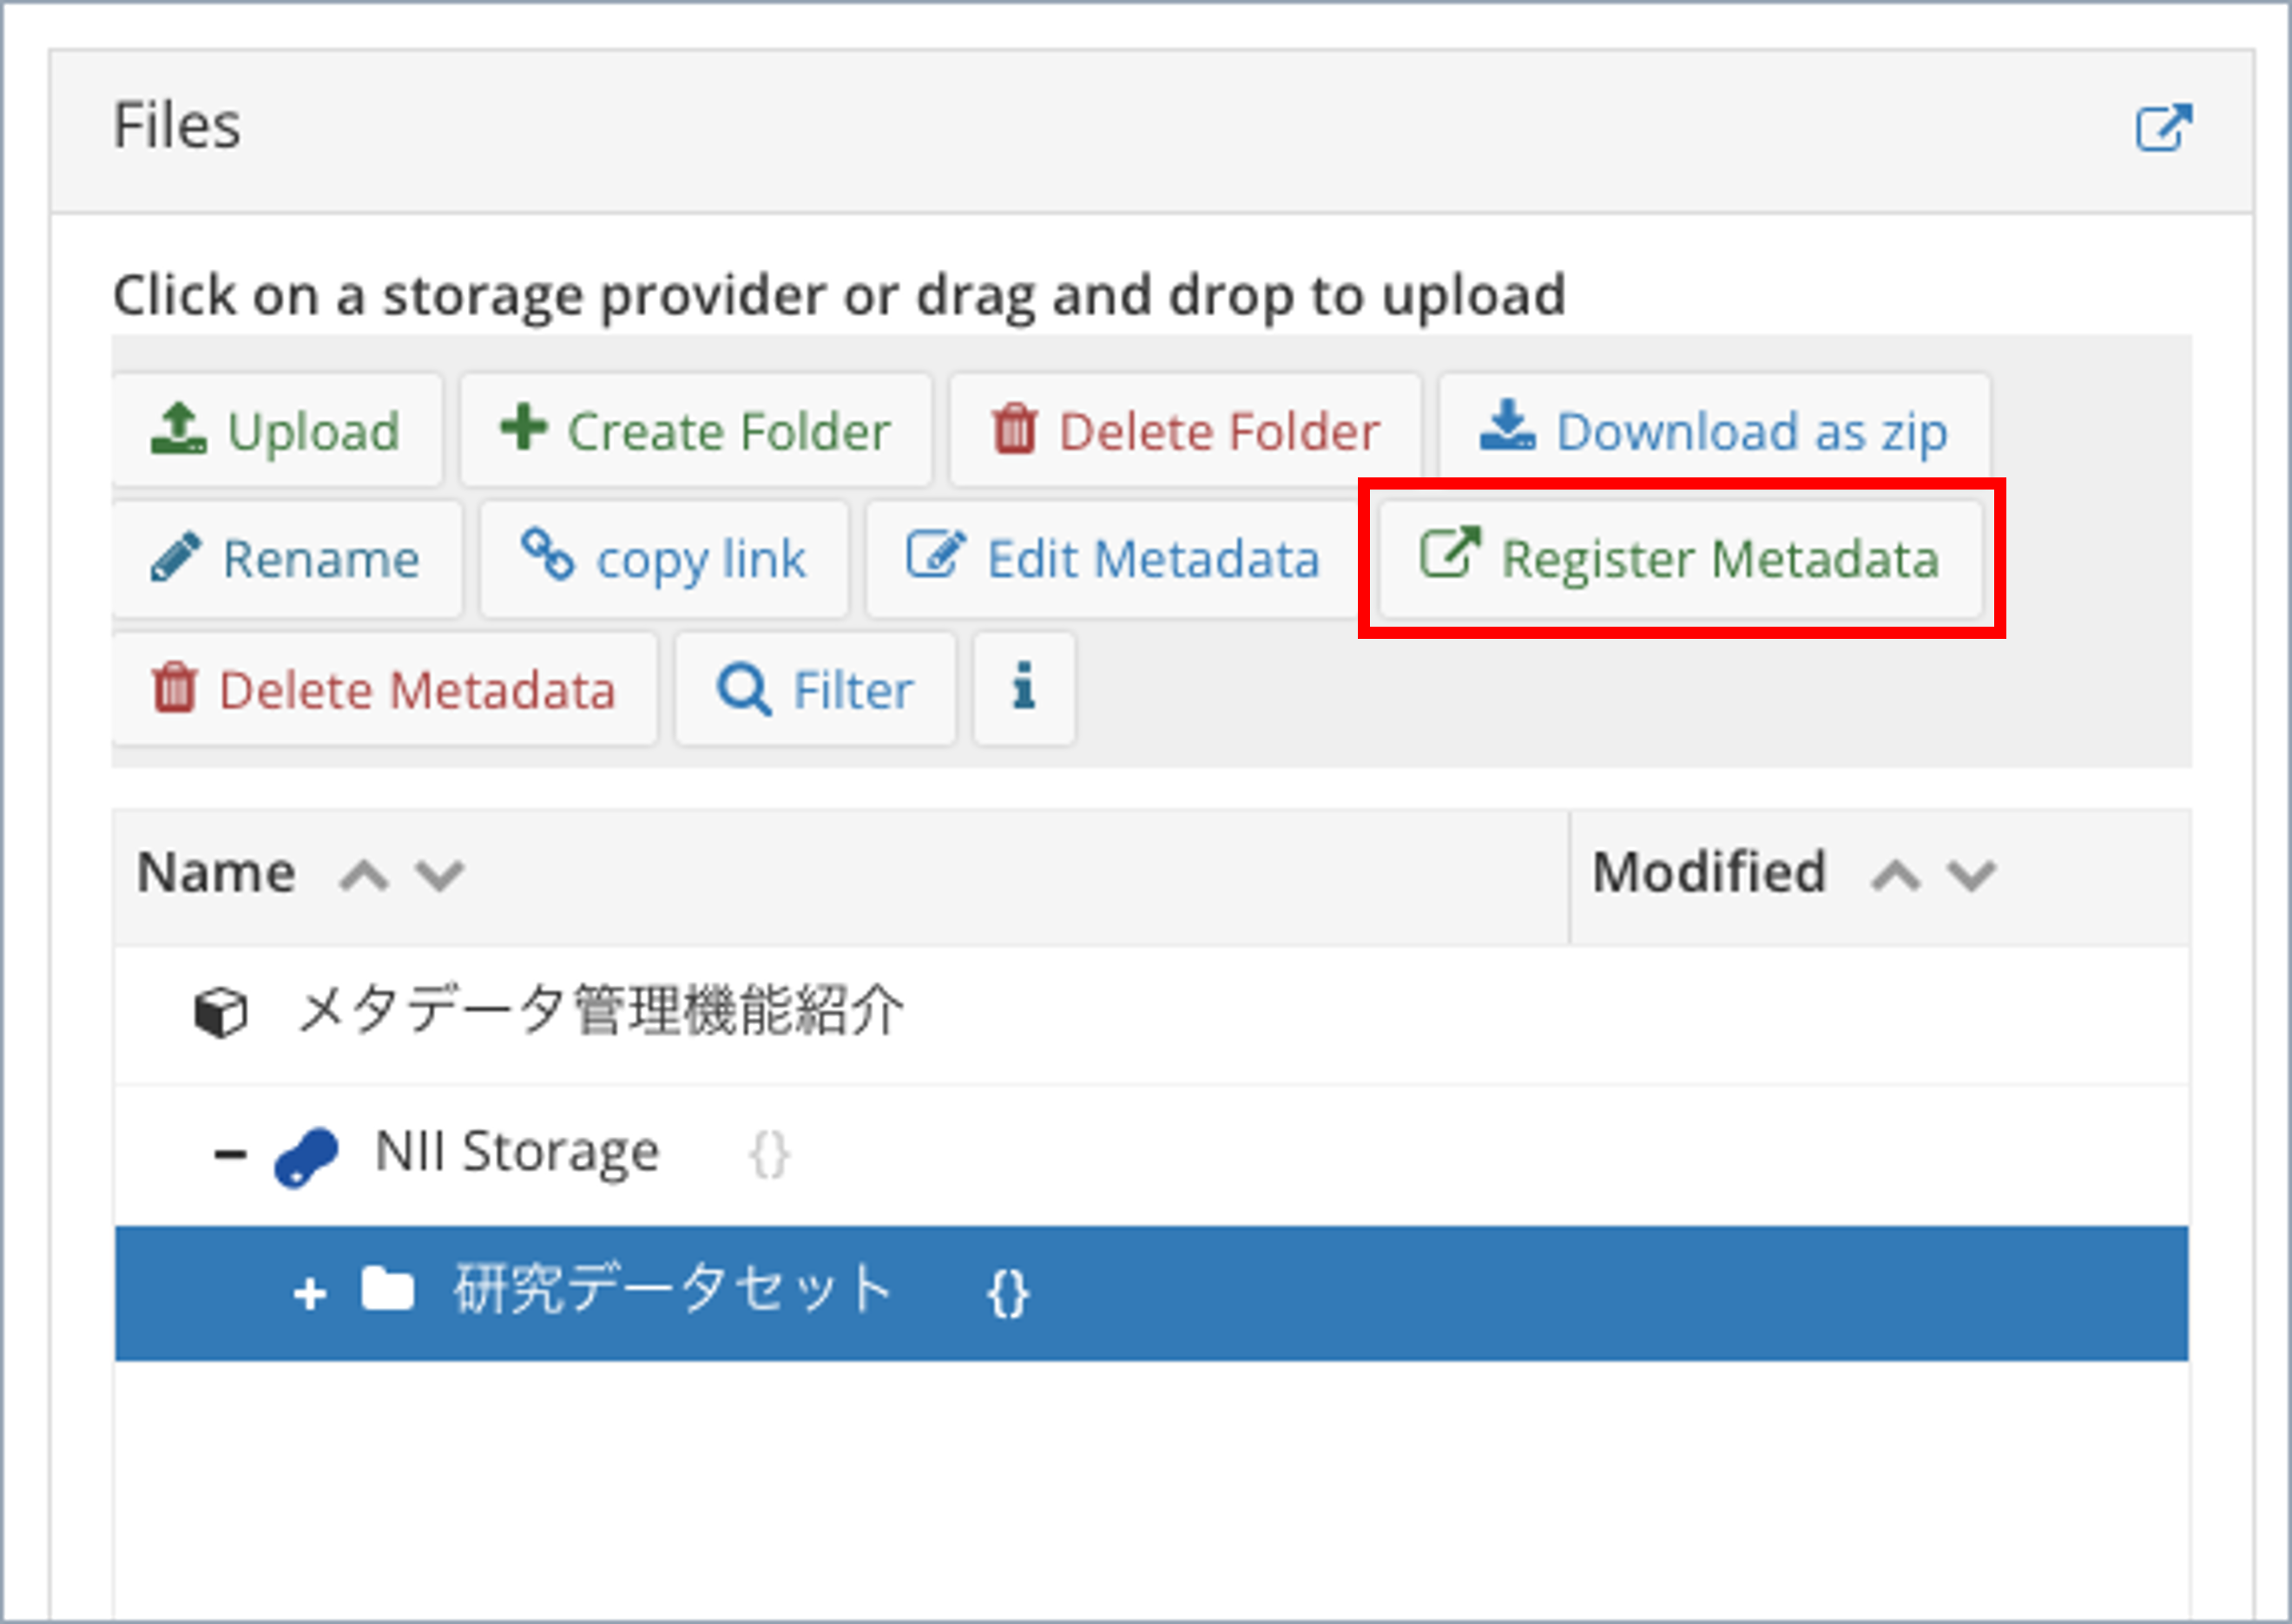 file-metadata-registration-button-en.png